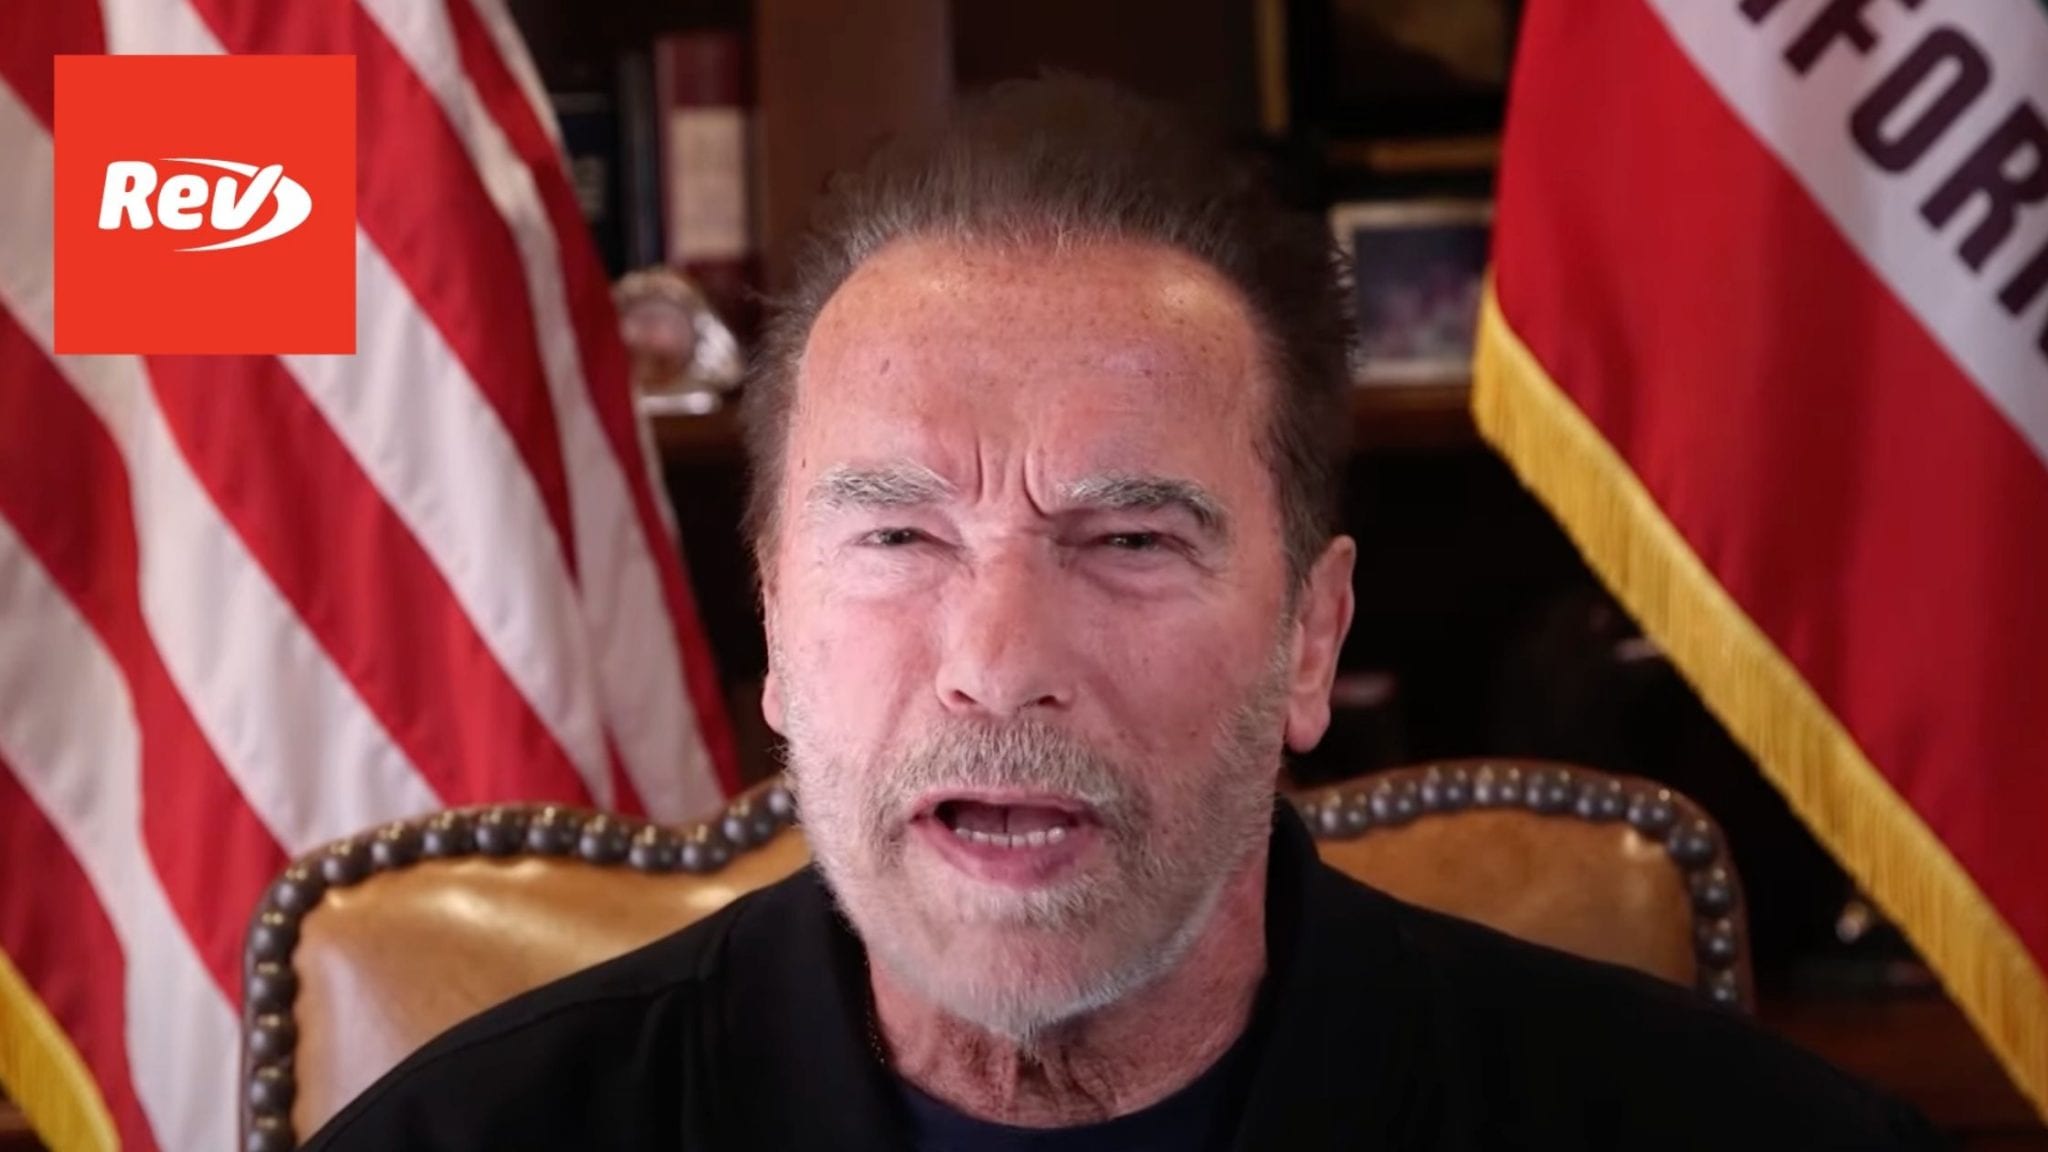 Governor Schwarzenegger Video Speech on Capitol Attack